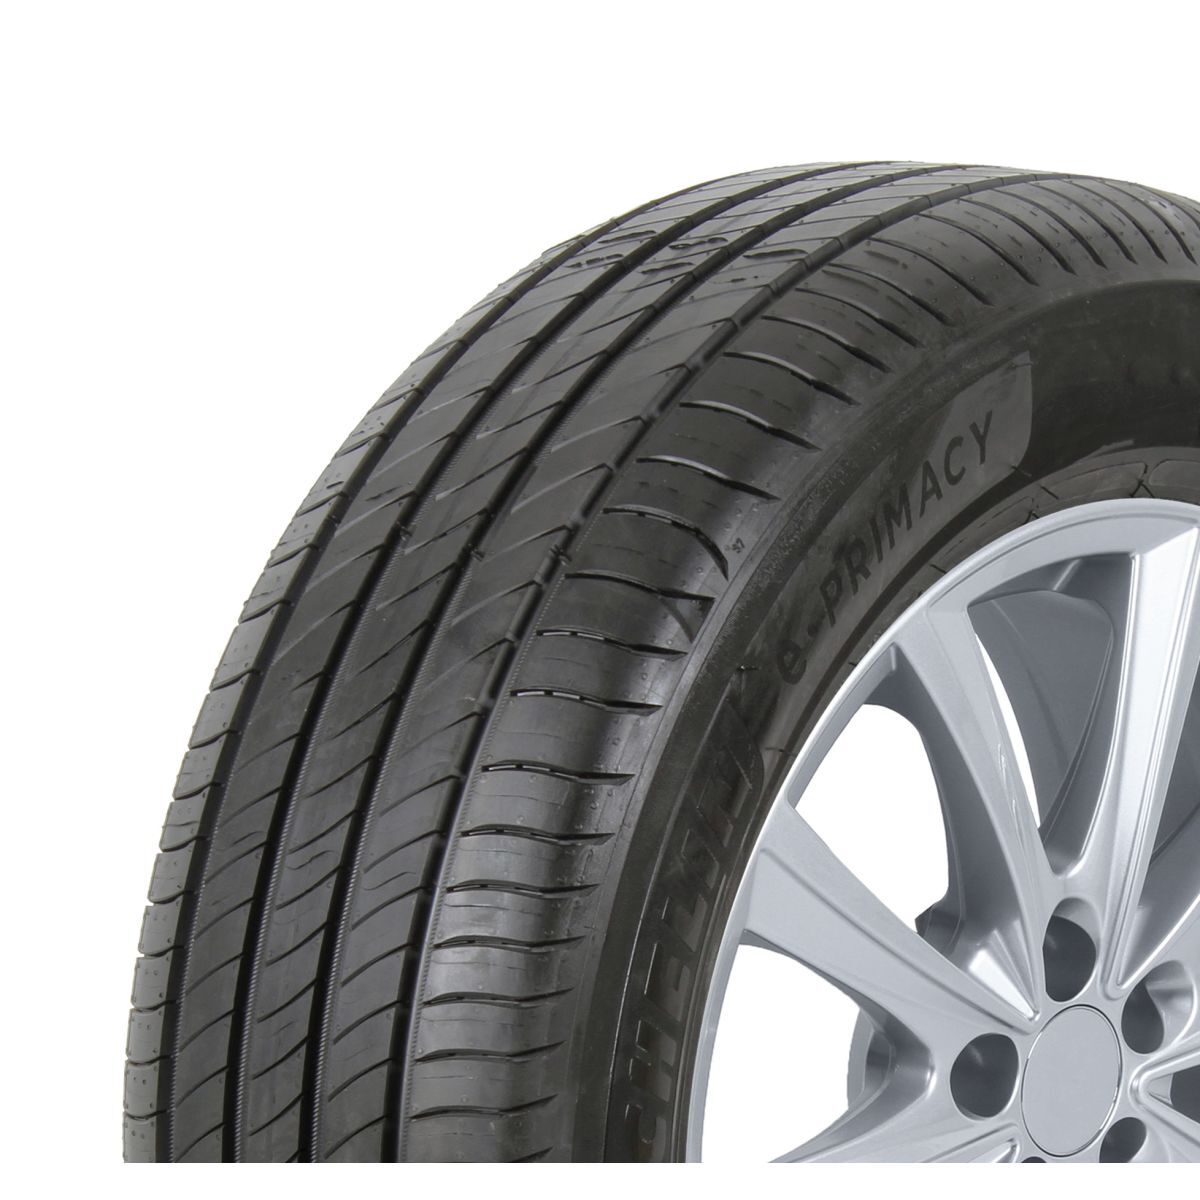 Neumáticos de verano MICHELIN E Primacy 215/60R17 96H